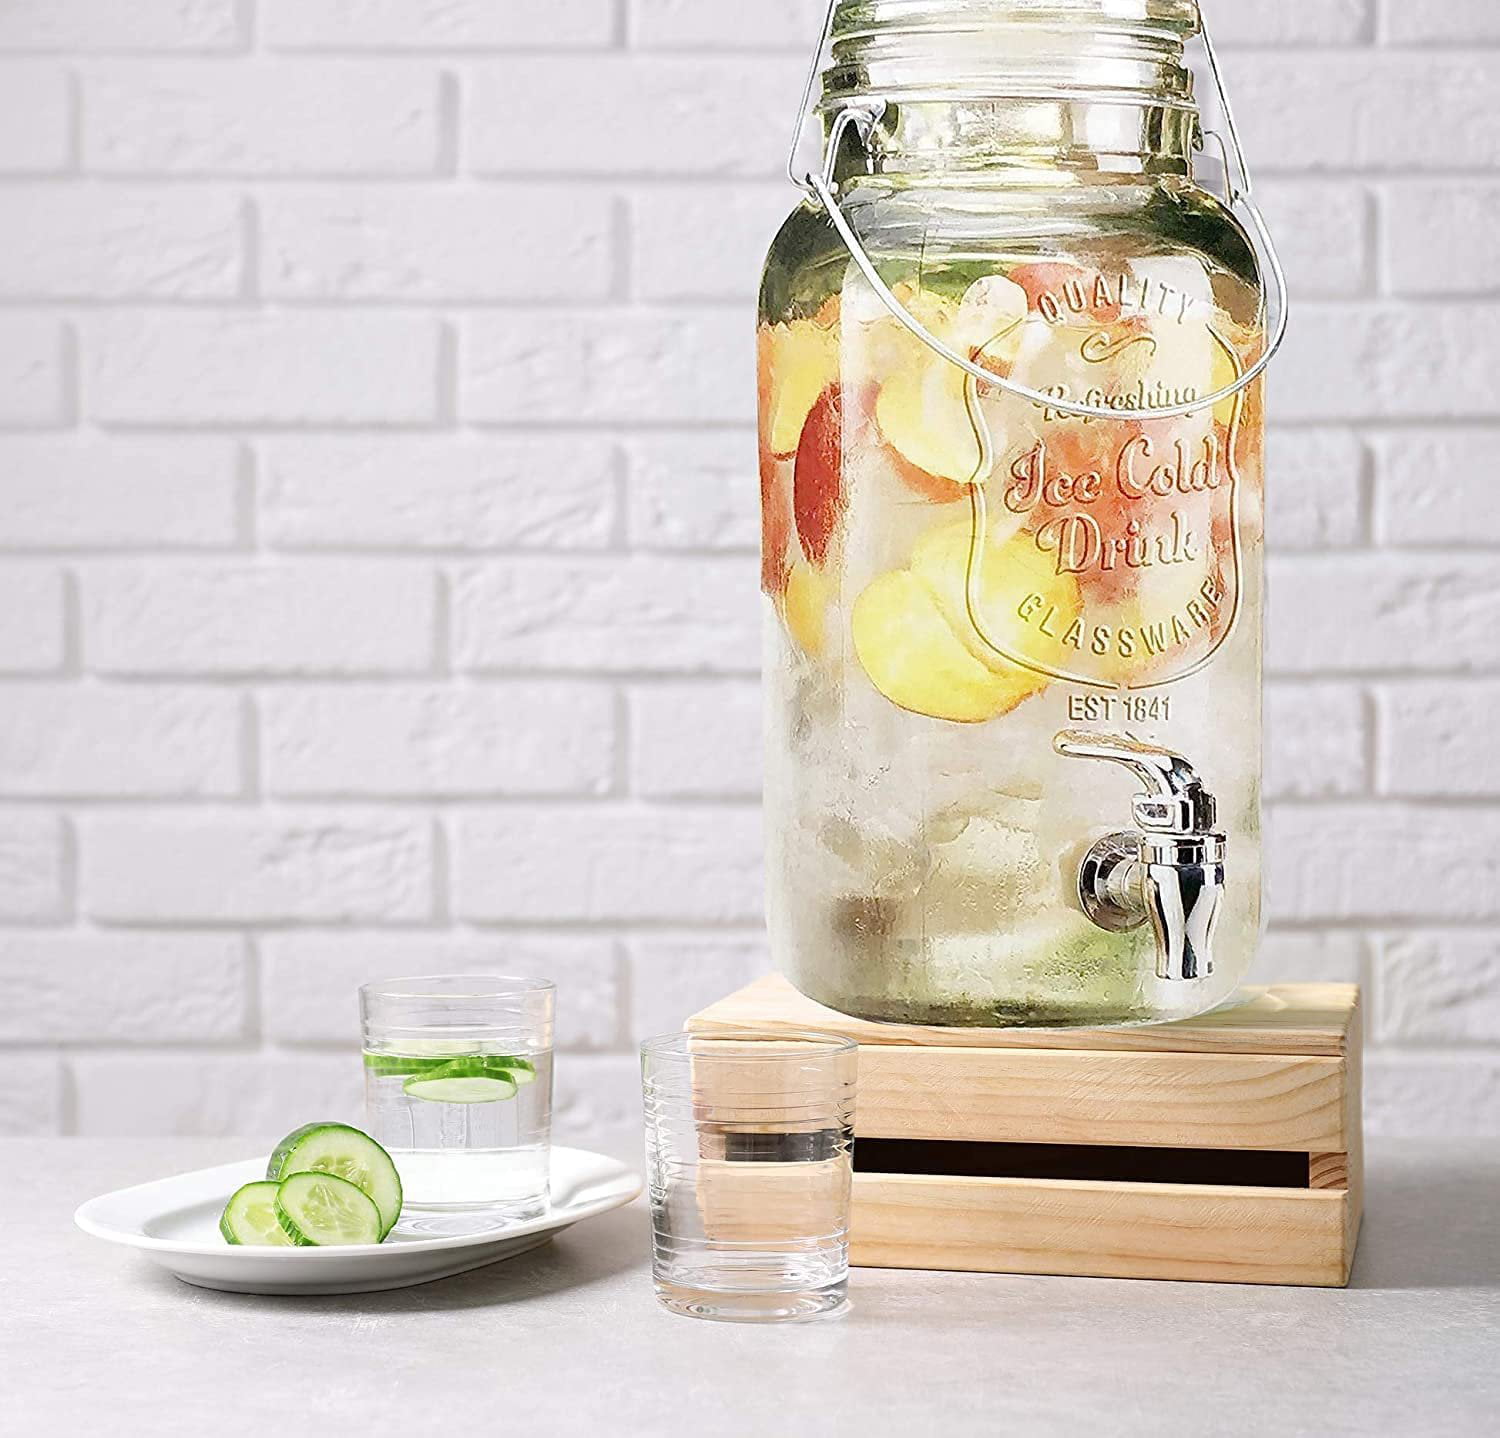 UMAID Drink Dispenser for parties [Set of 2] 1 Gallon Glass Jar